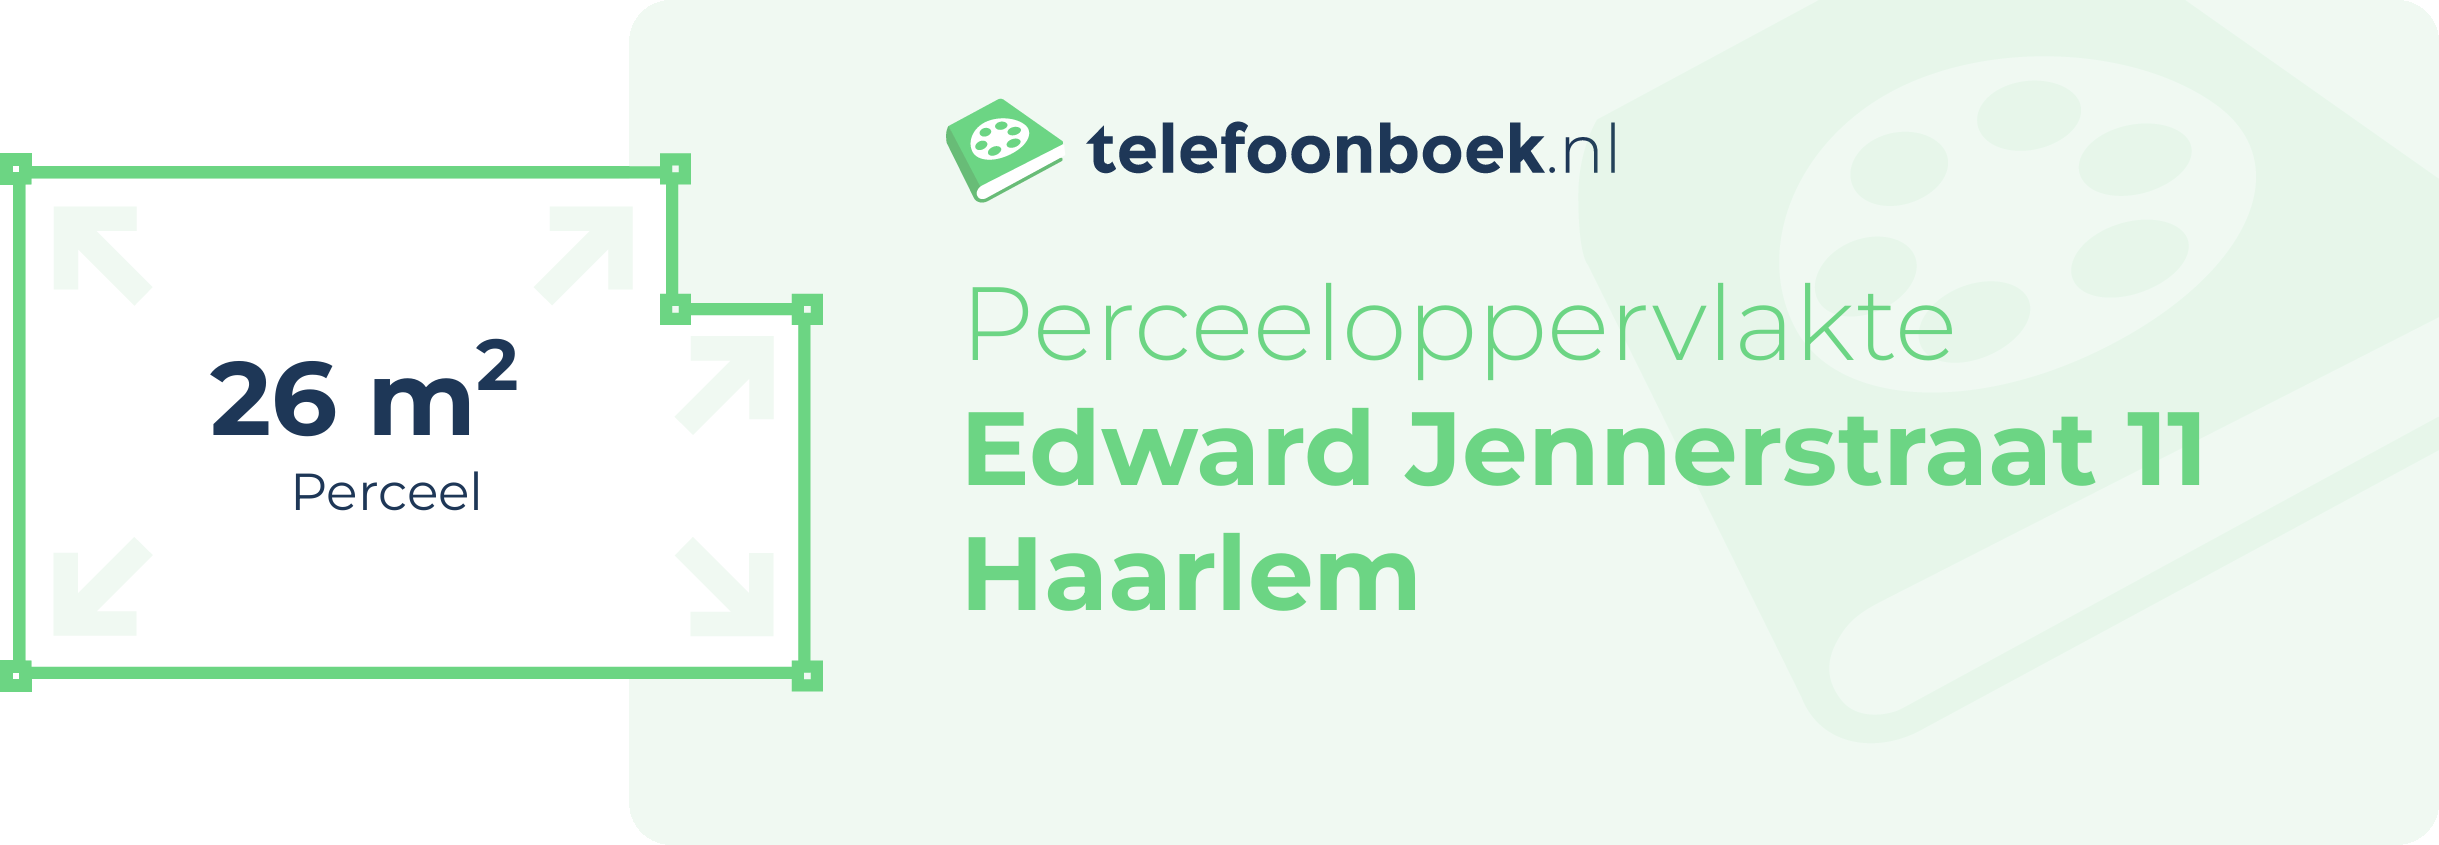 Perceeloppervlakte Edward Jennerstraat 11 Haarlem